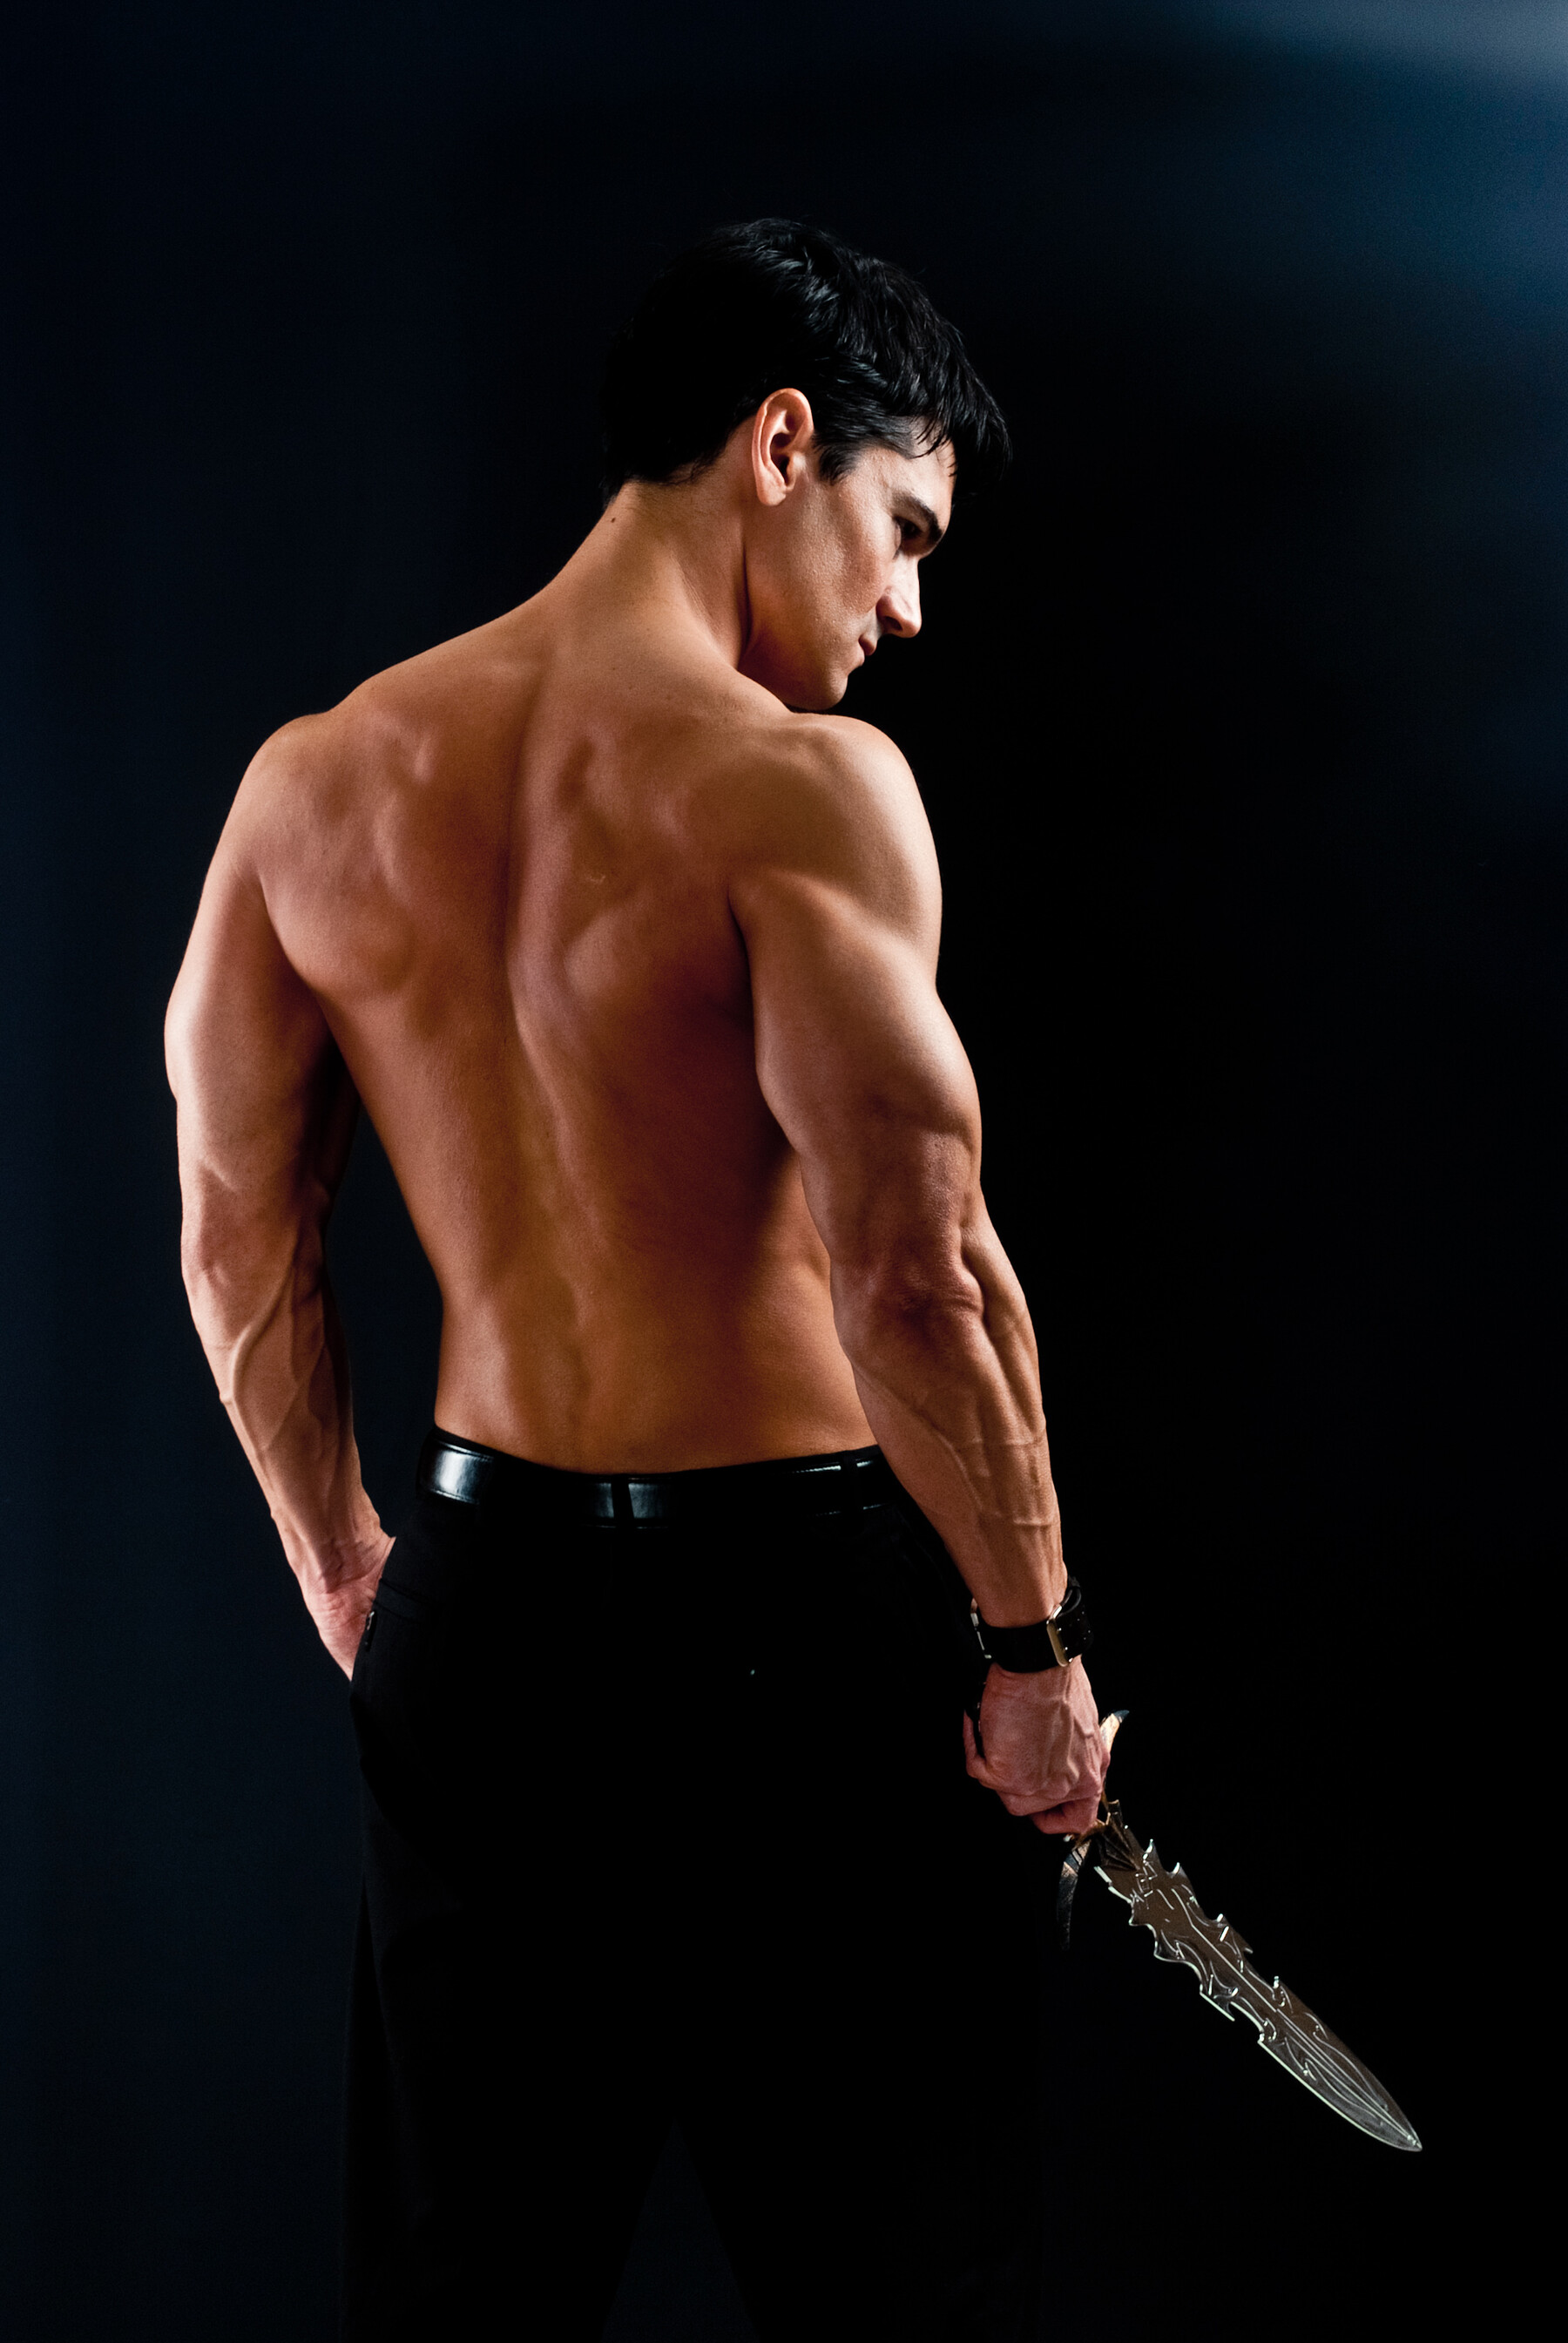 Sexy Warrior Poses Image & Photo (Free Trial) | Bigstock